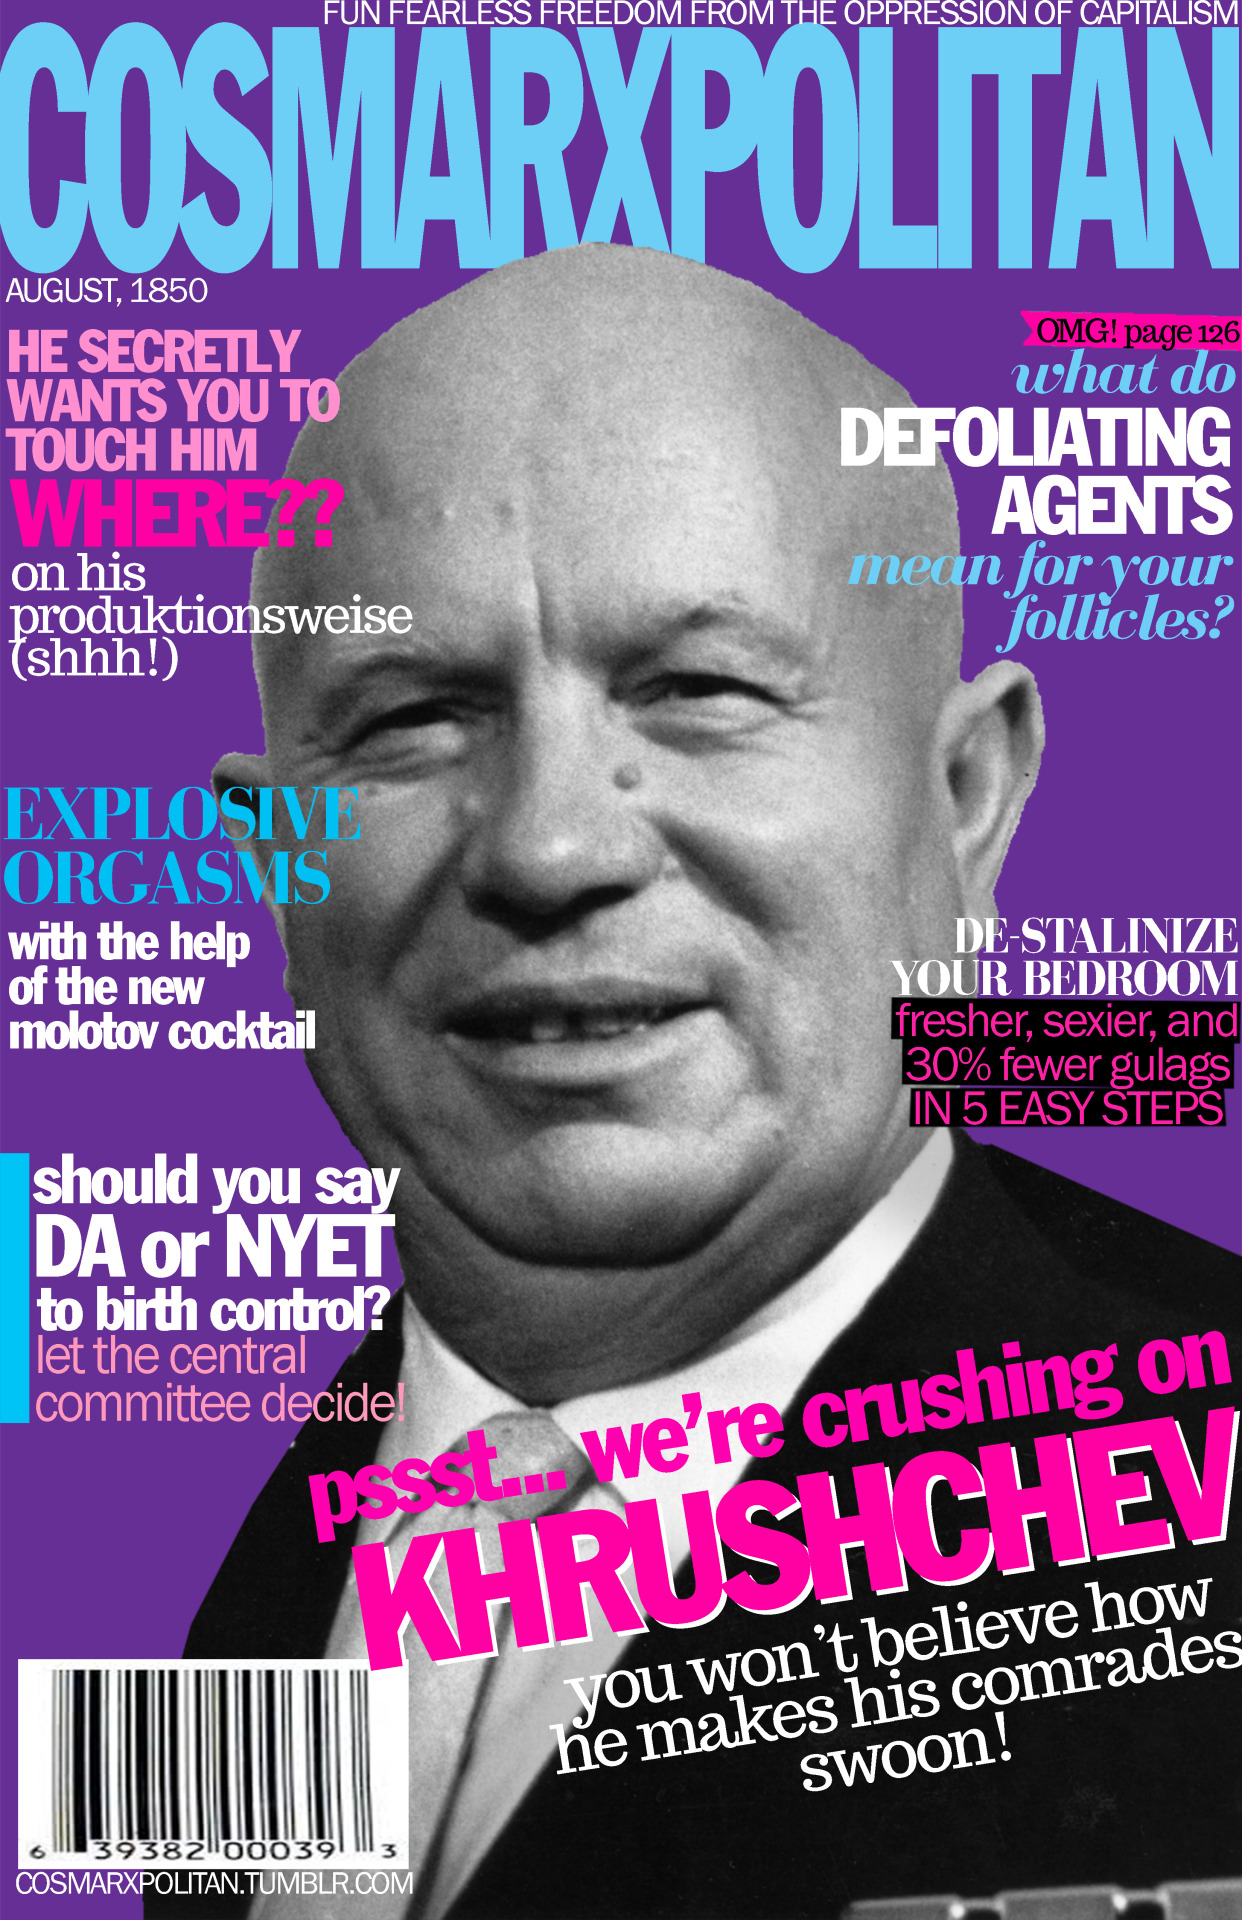 cosmarxpolitan:
“ Cosmarxpolitan, Issue 14
Pssst… we’re crushing on Khruschev
”